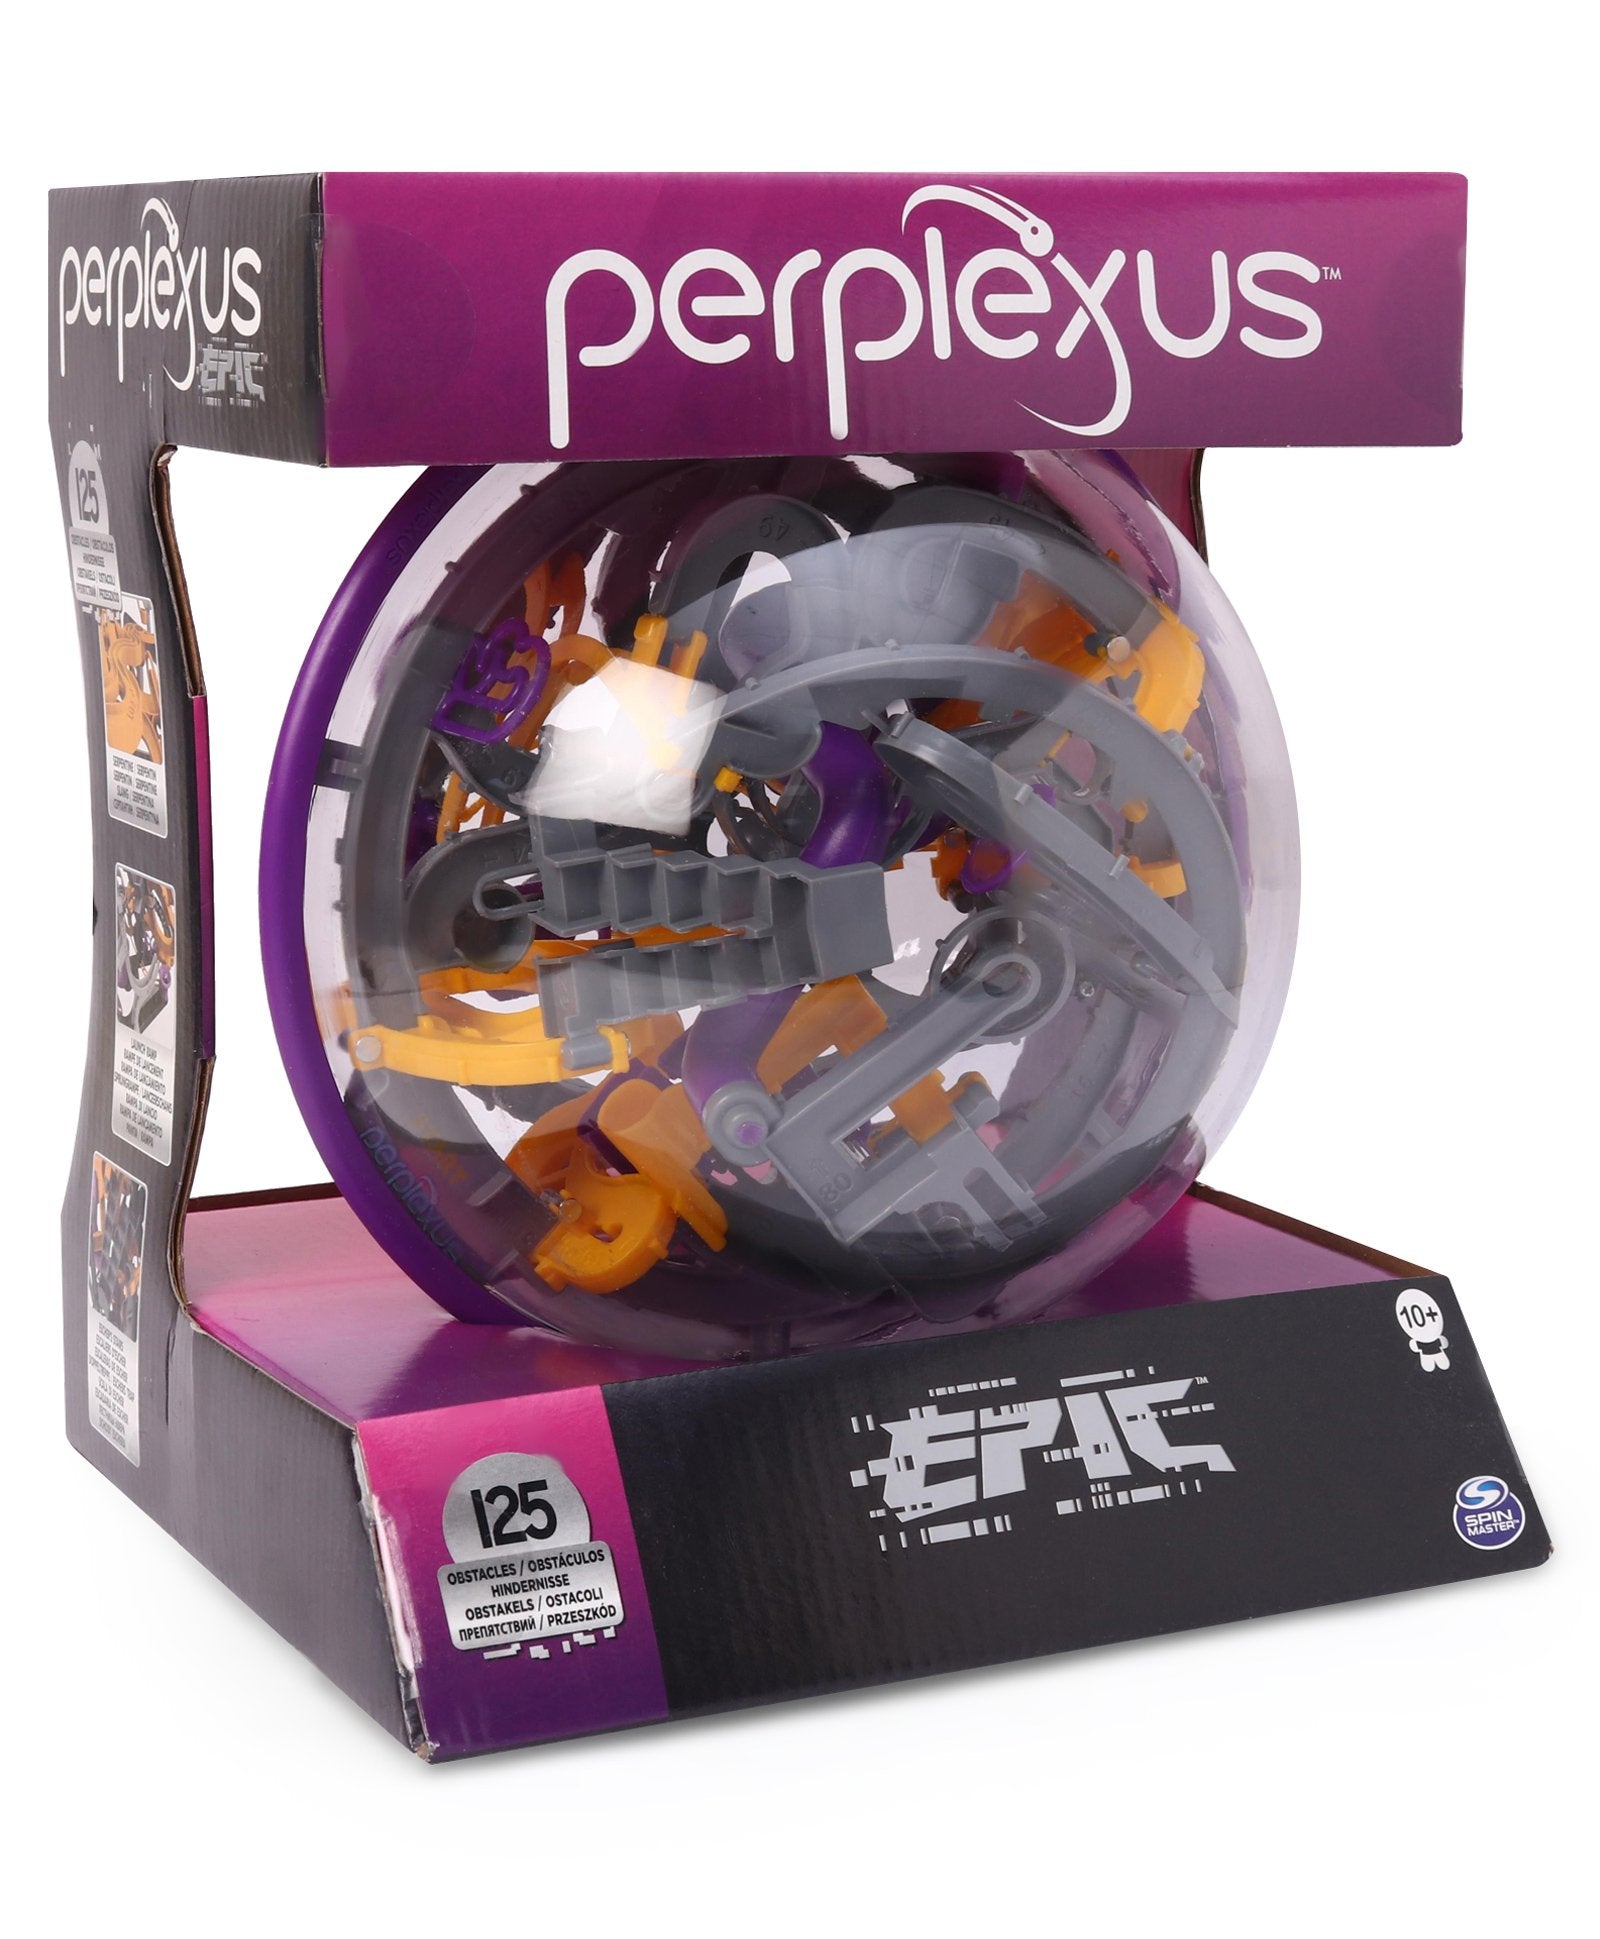 PerplexusPortal #Perplexus #Game #Games #Summer #Puzzle #Puzzles #puz